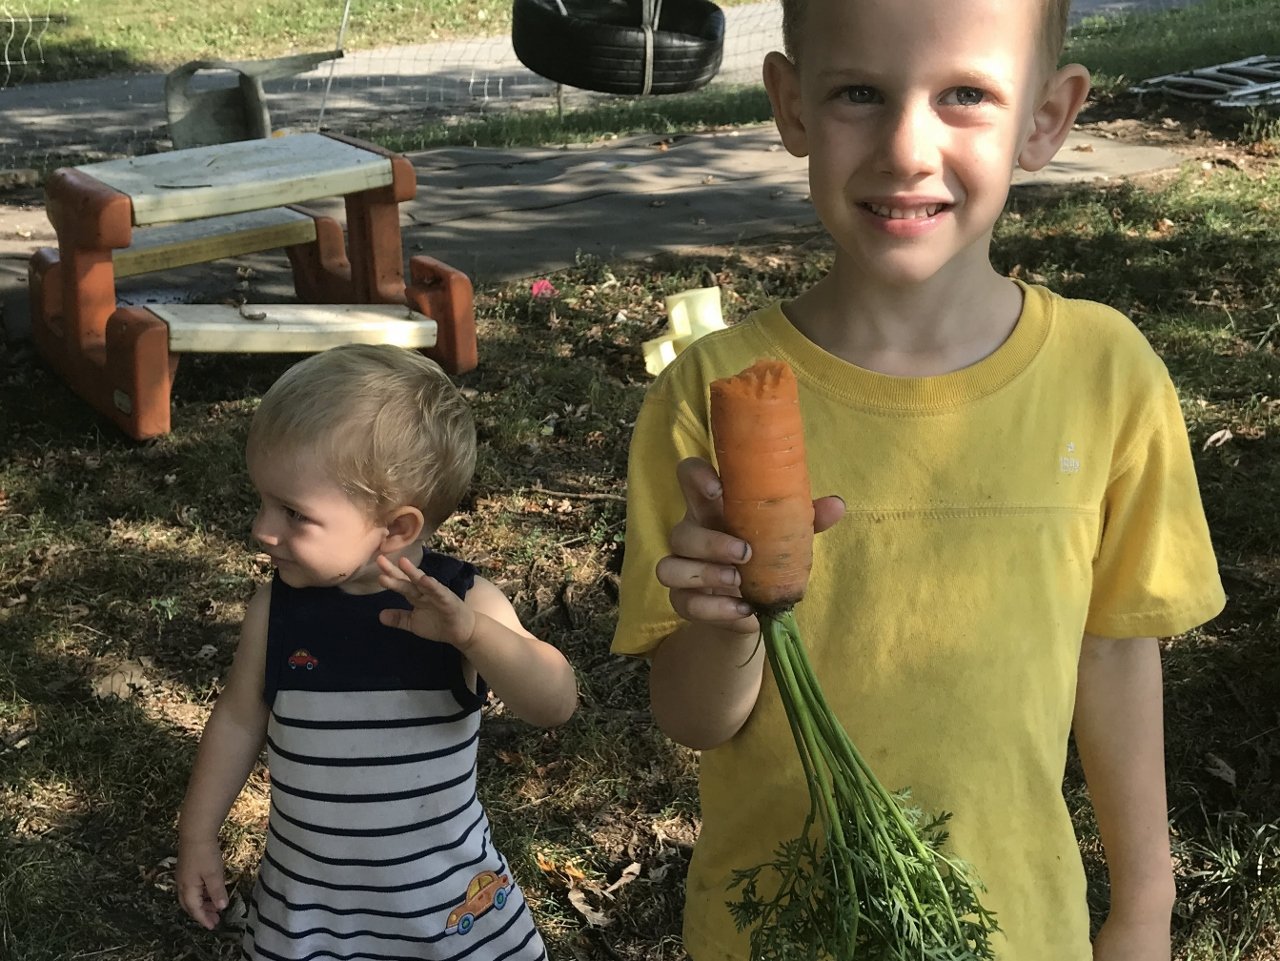 Next Happening: Carrots Finally!